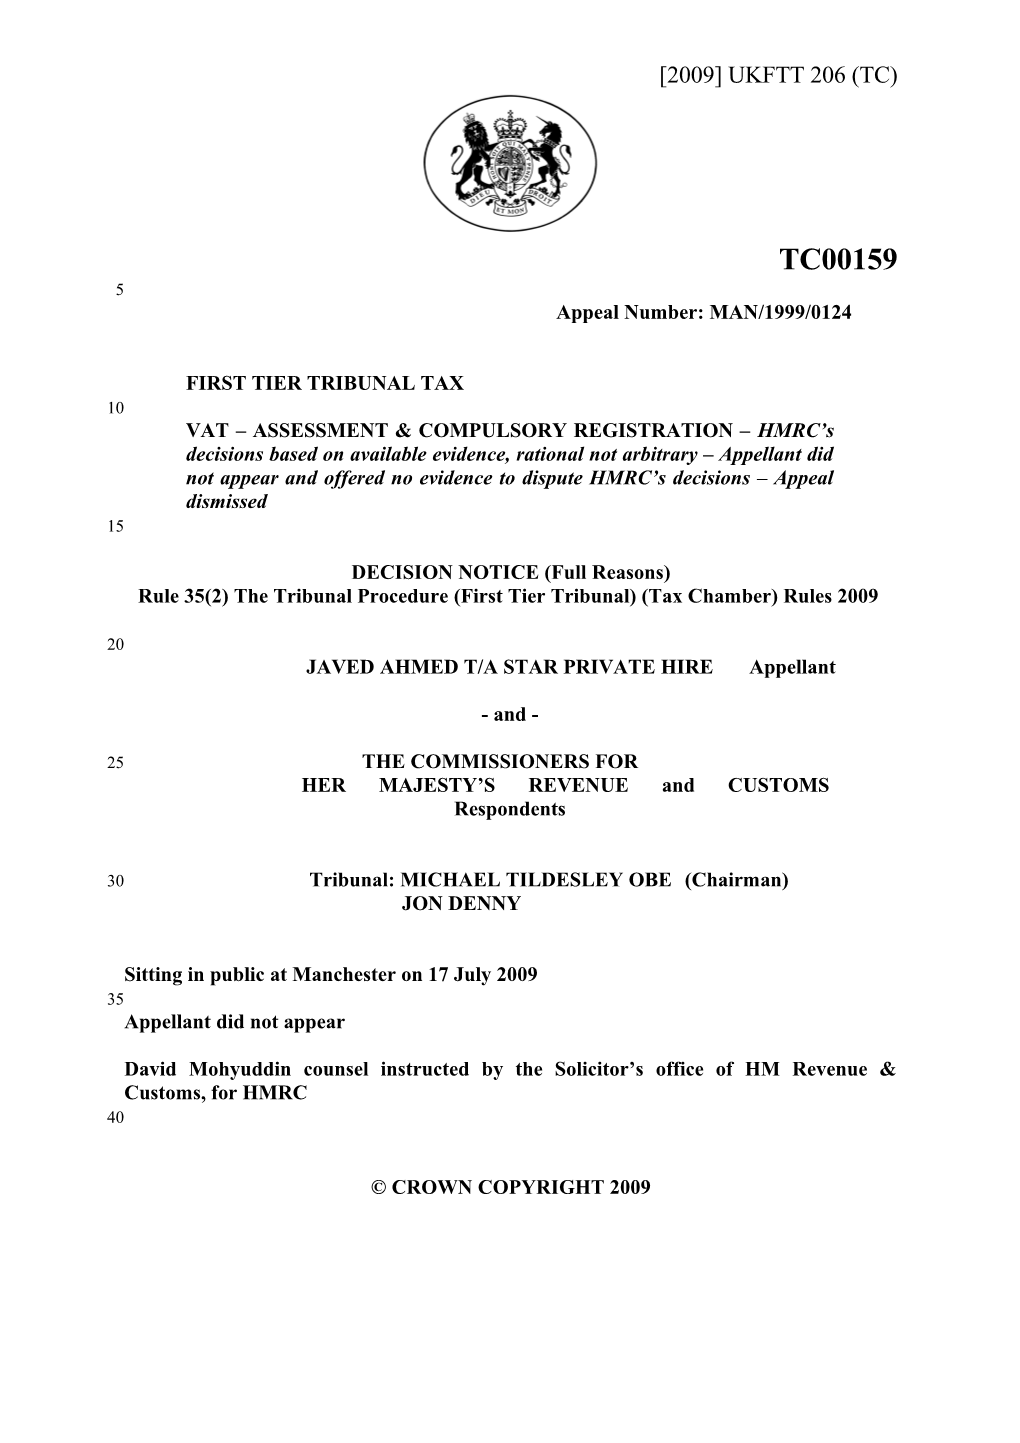 First Tier Tribunal Tax